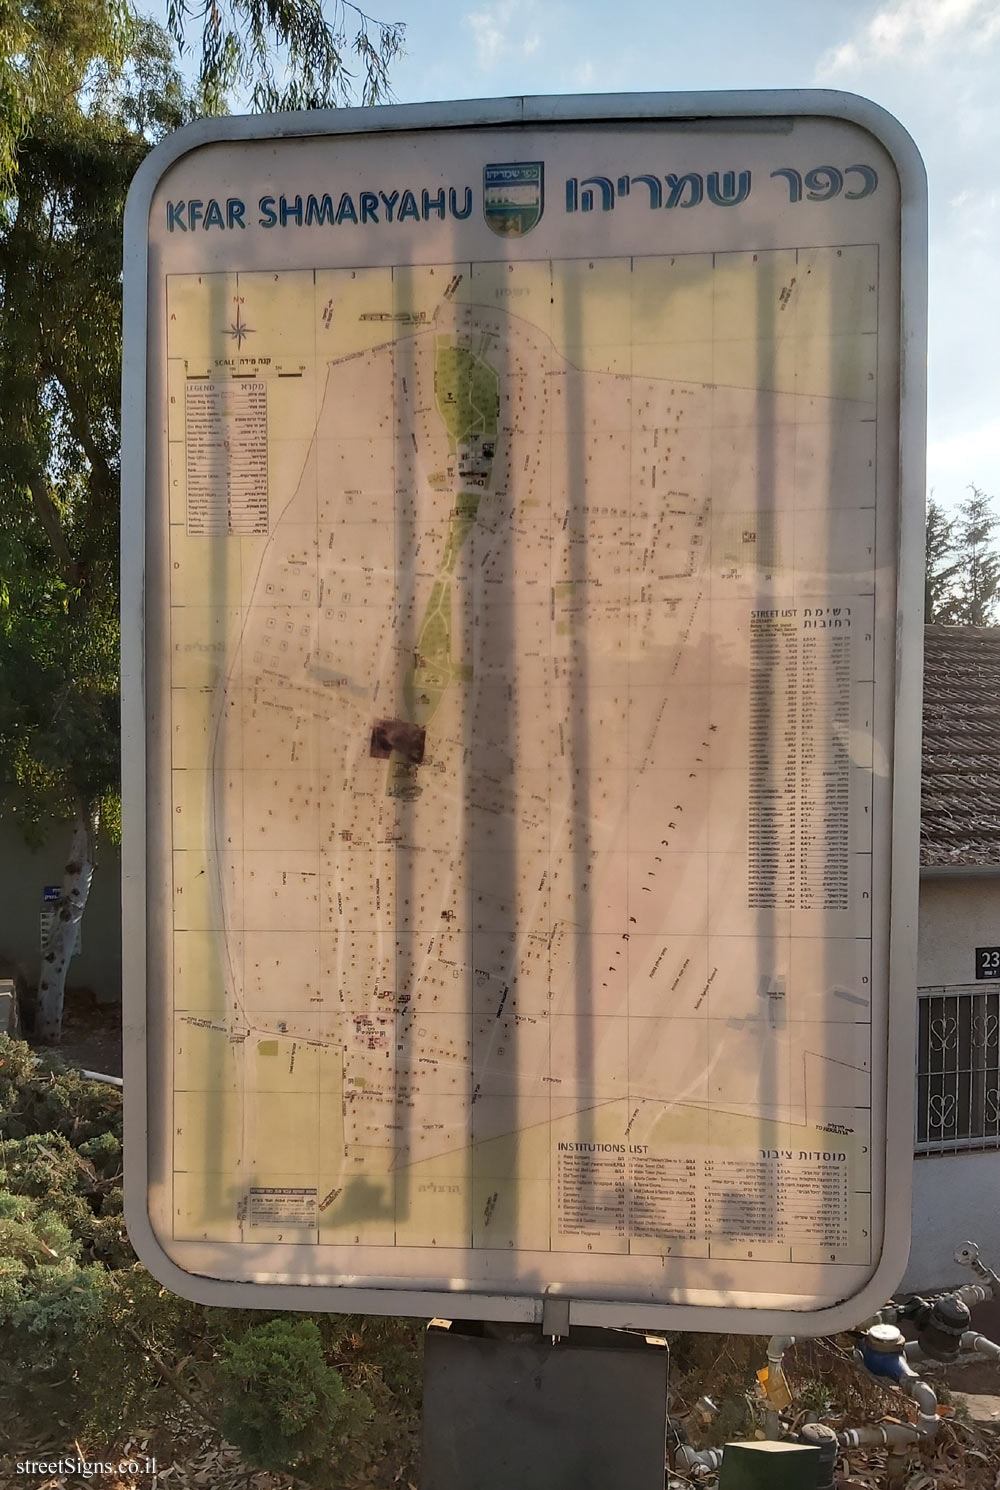 Kfar Shmaryahu - Map of the settlement